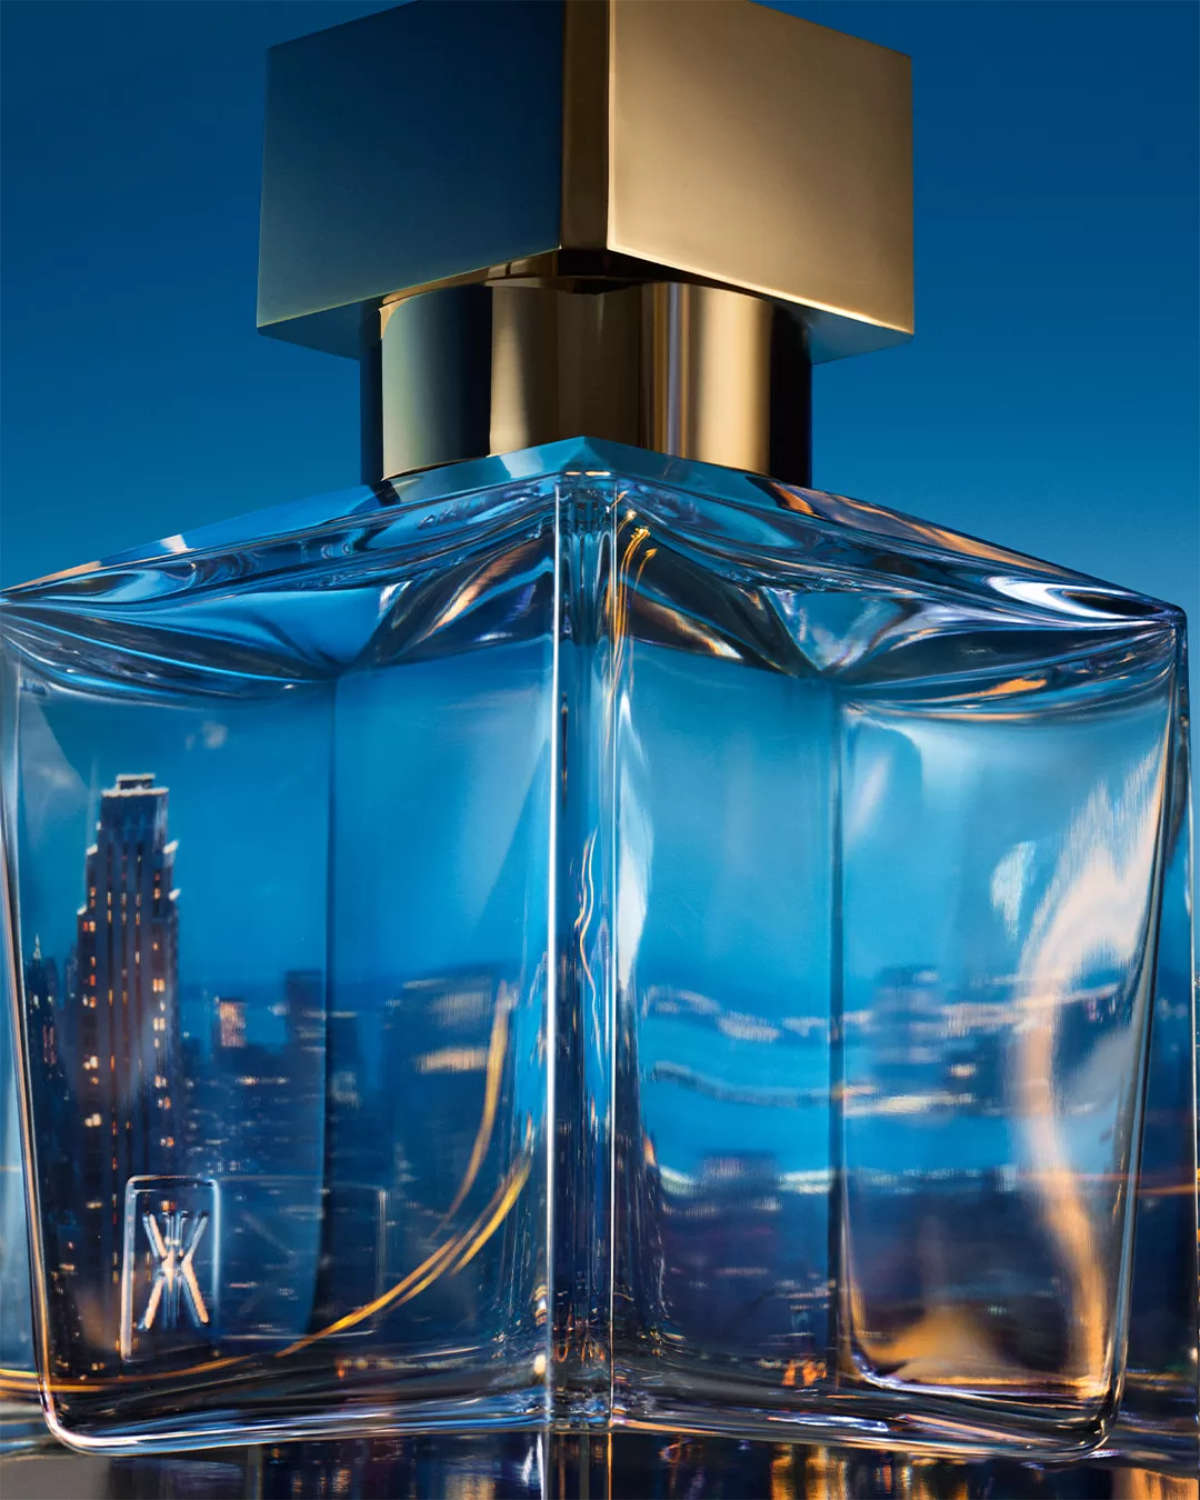 Francis Kurkdjian Presents Its New Eau De Parfum: 724